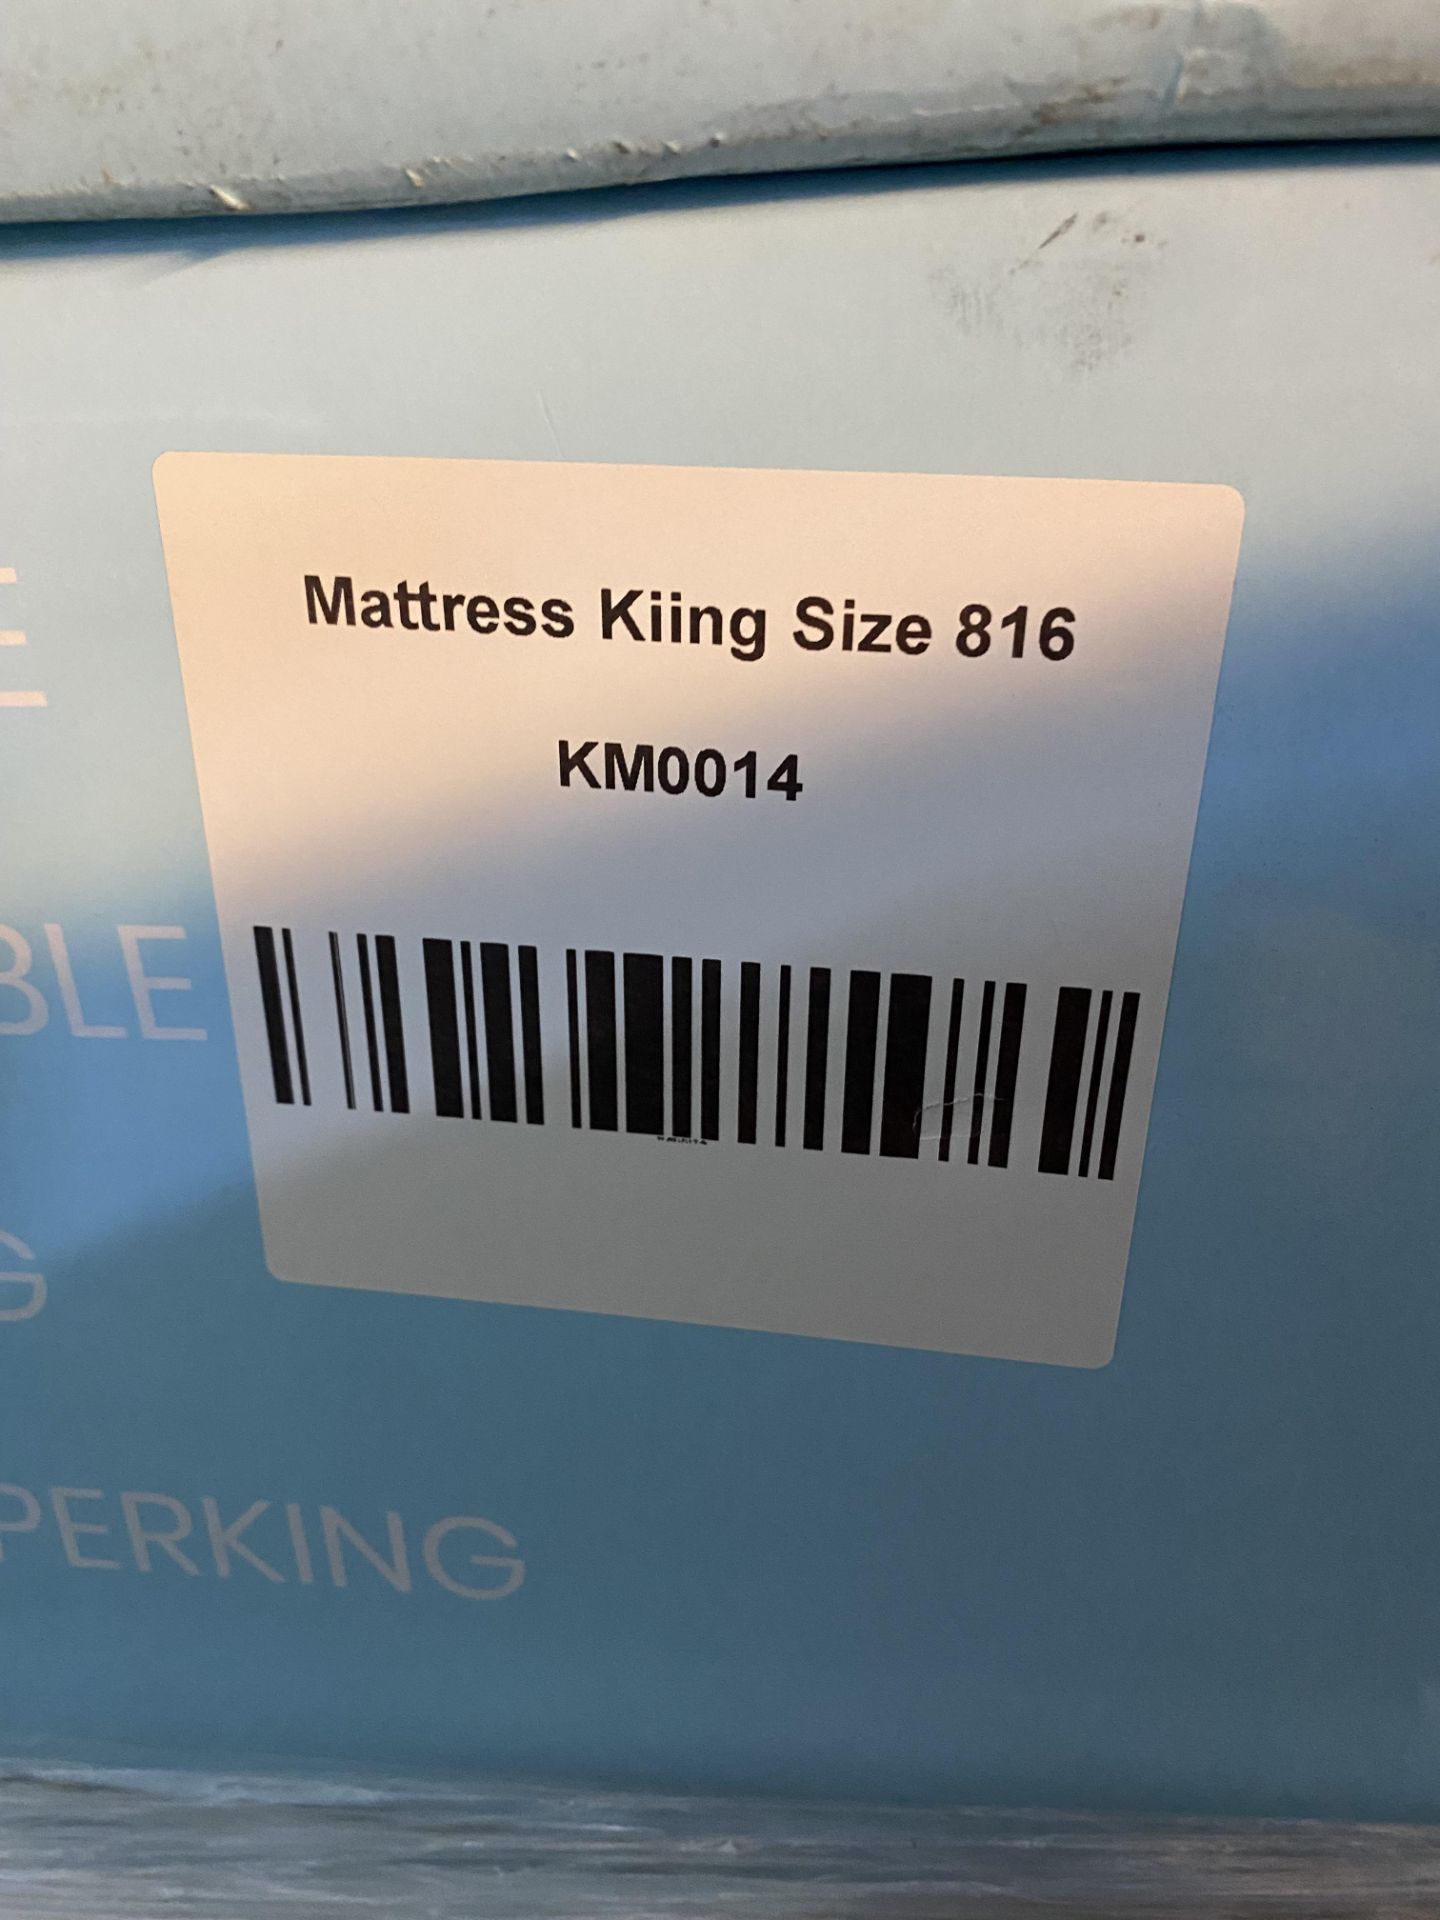 ComfaSleep KM0014 King Size 816 Mattress - Image 11 of 12